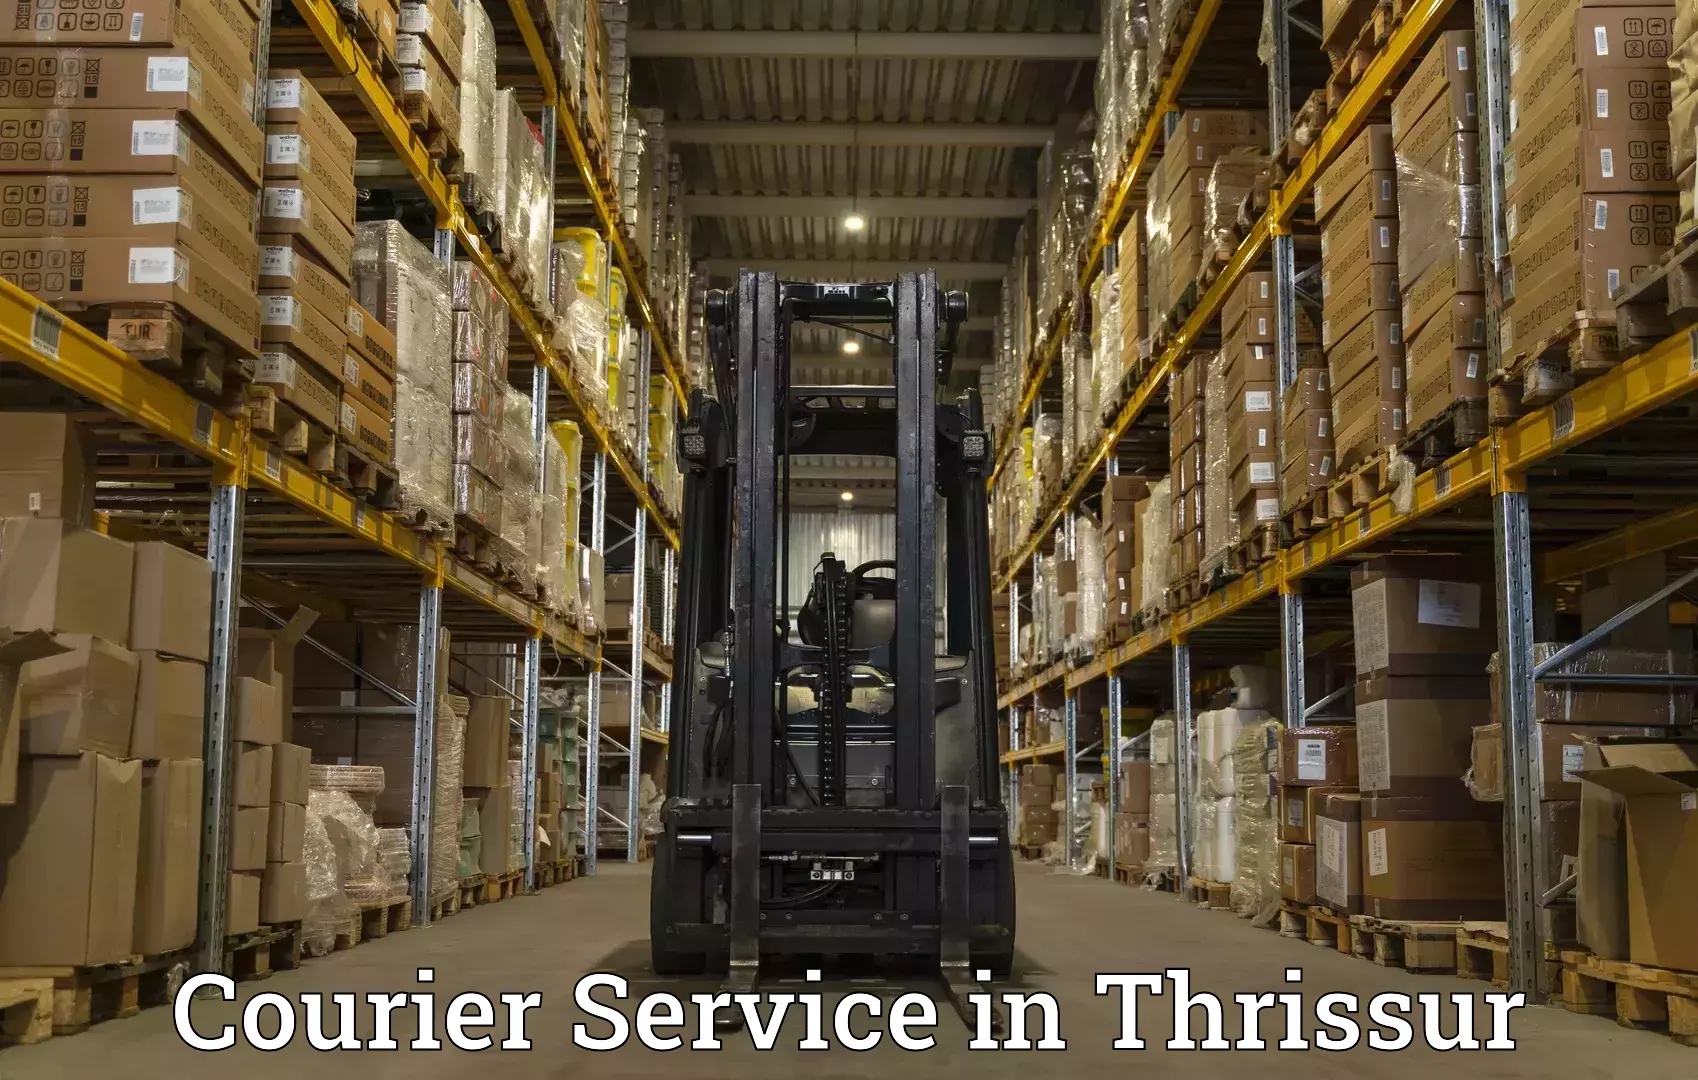 Courier service innovation in Thrissur